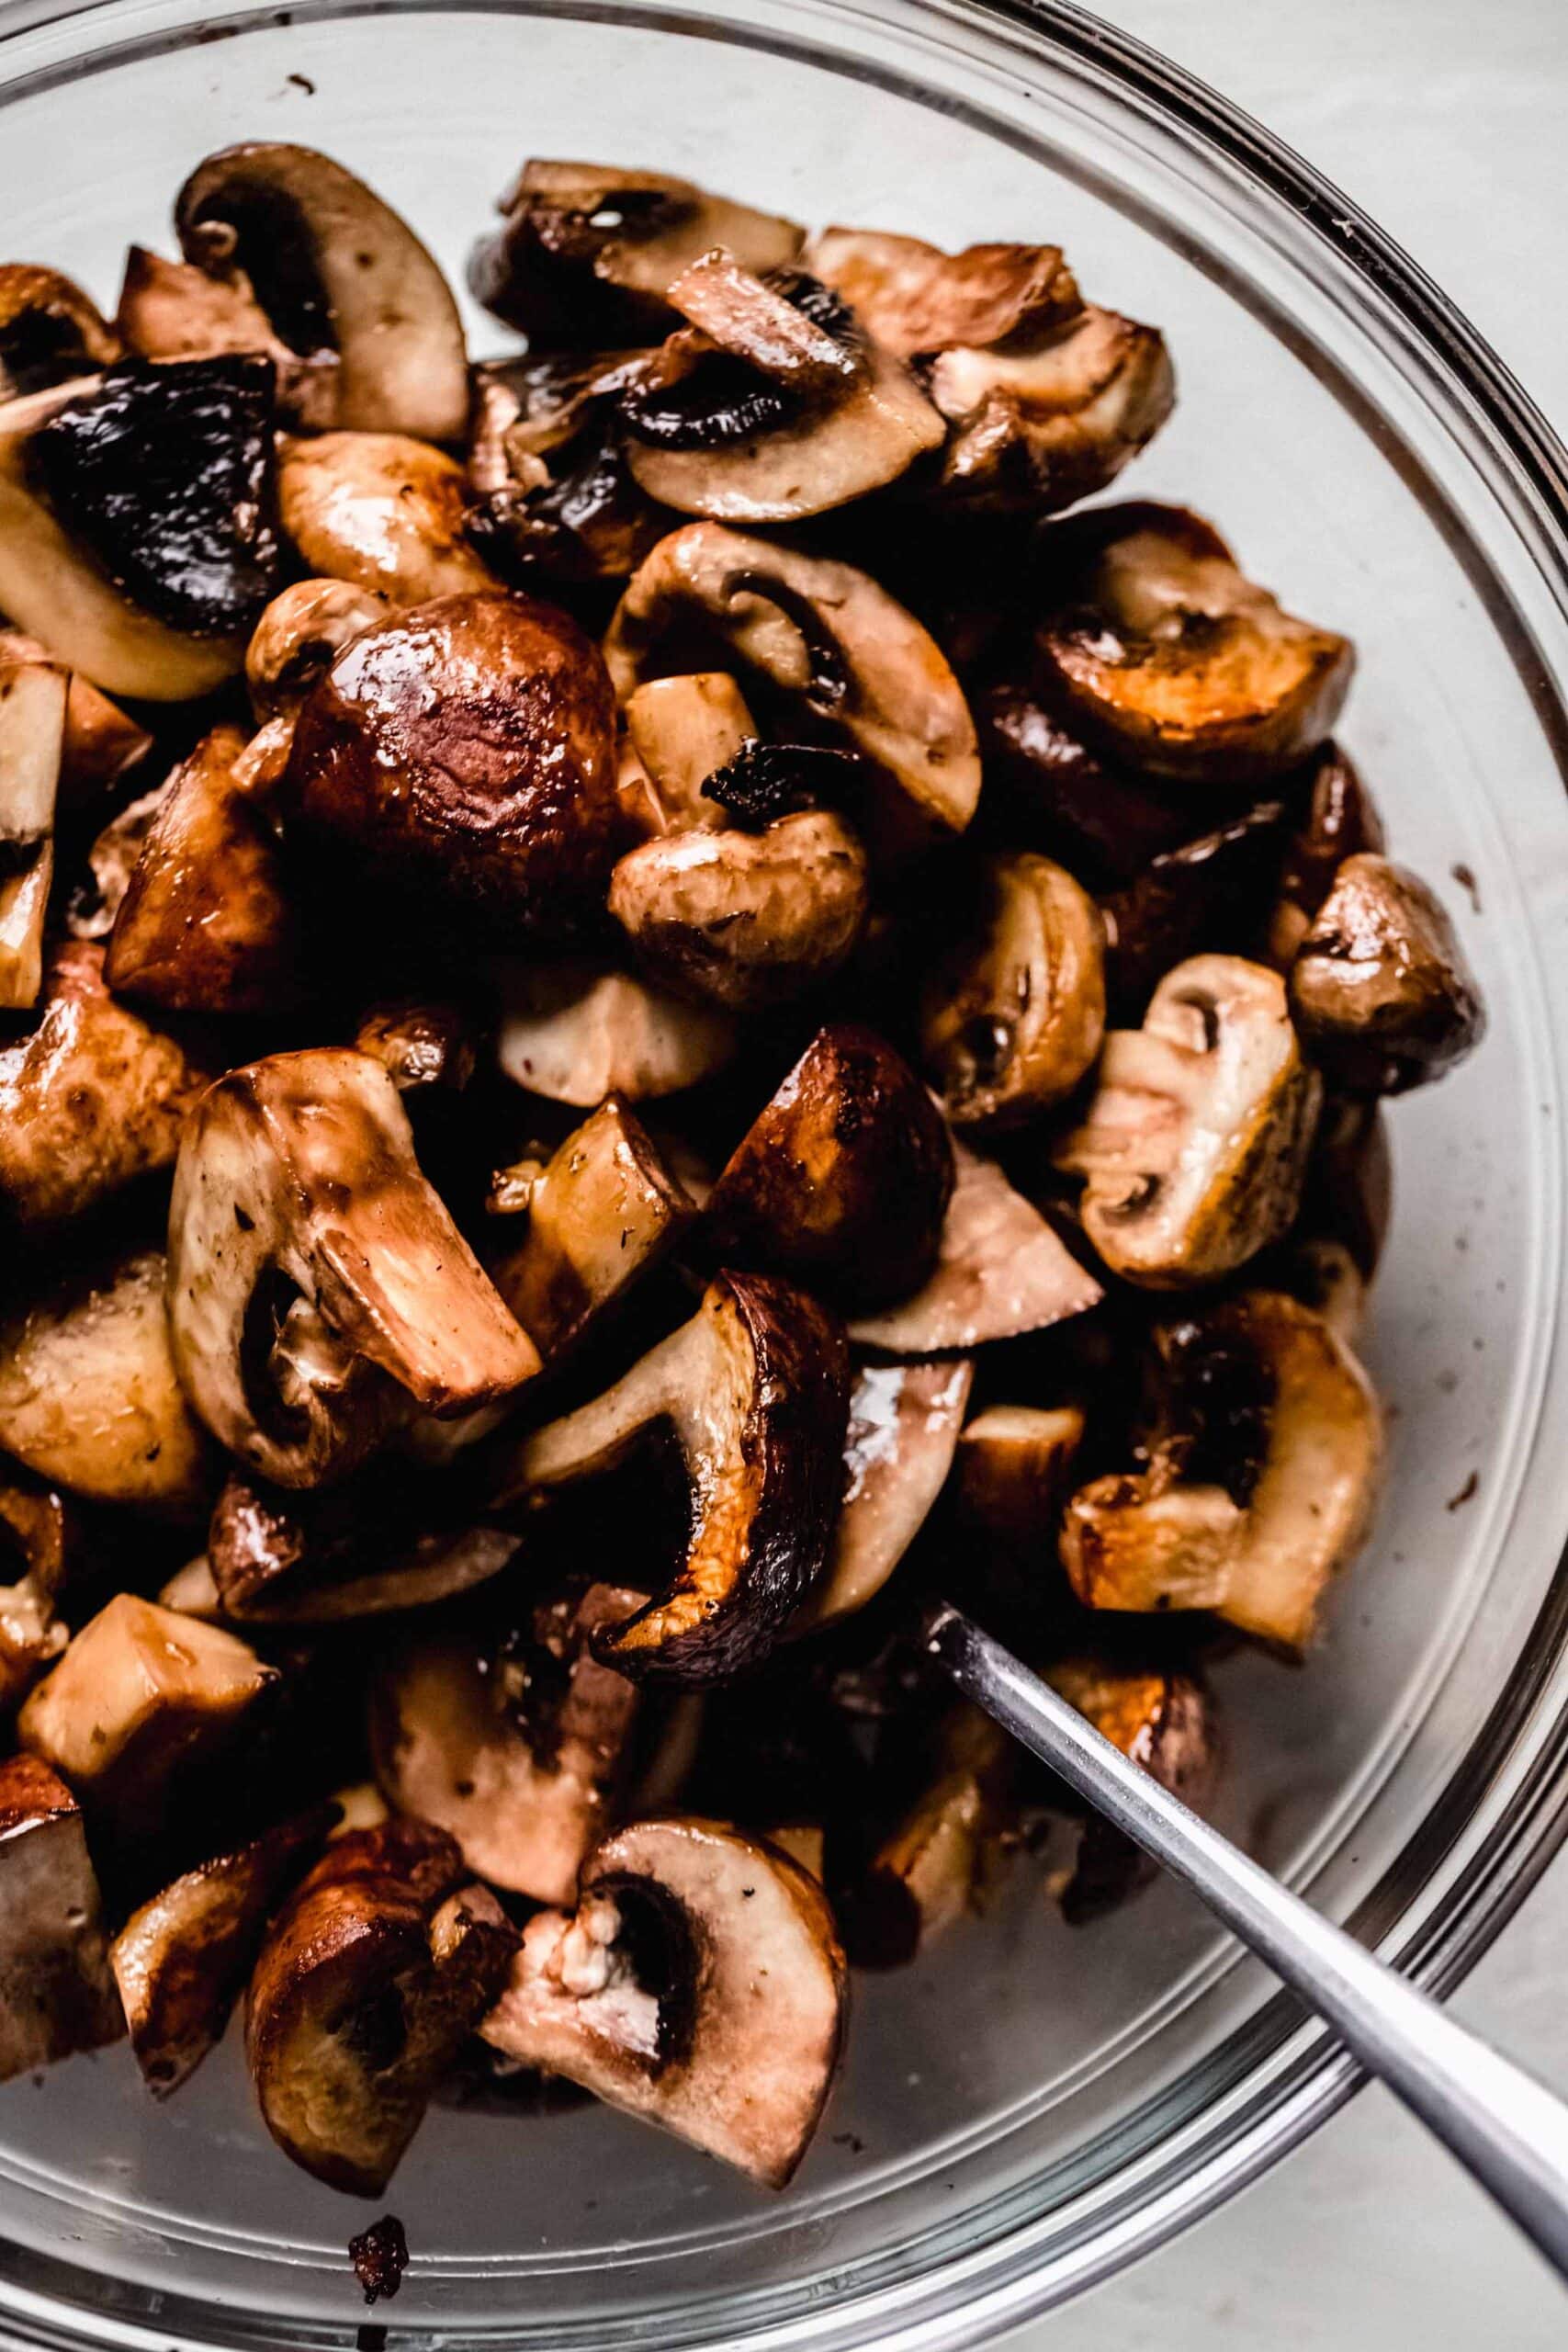 Sauteed mushrooms in bowl.